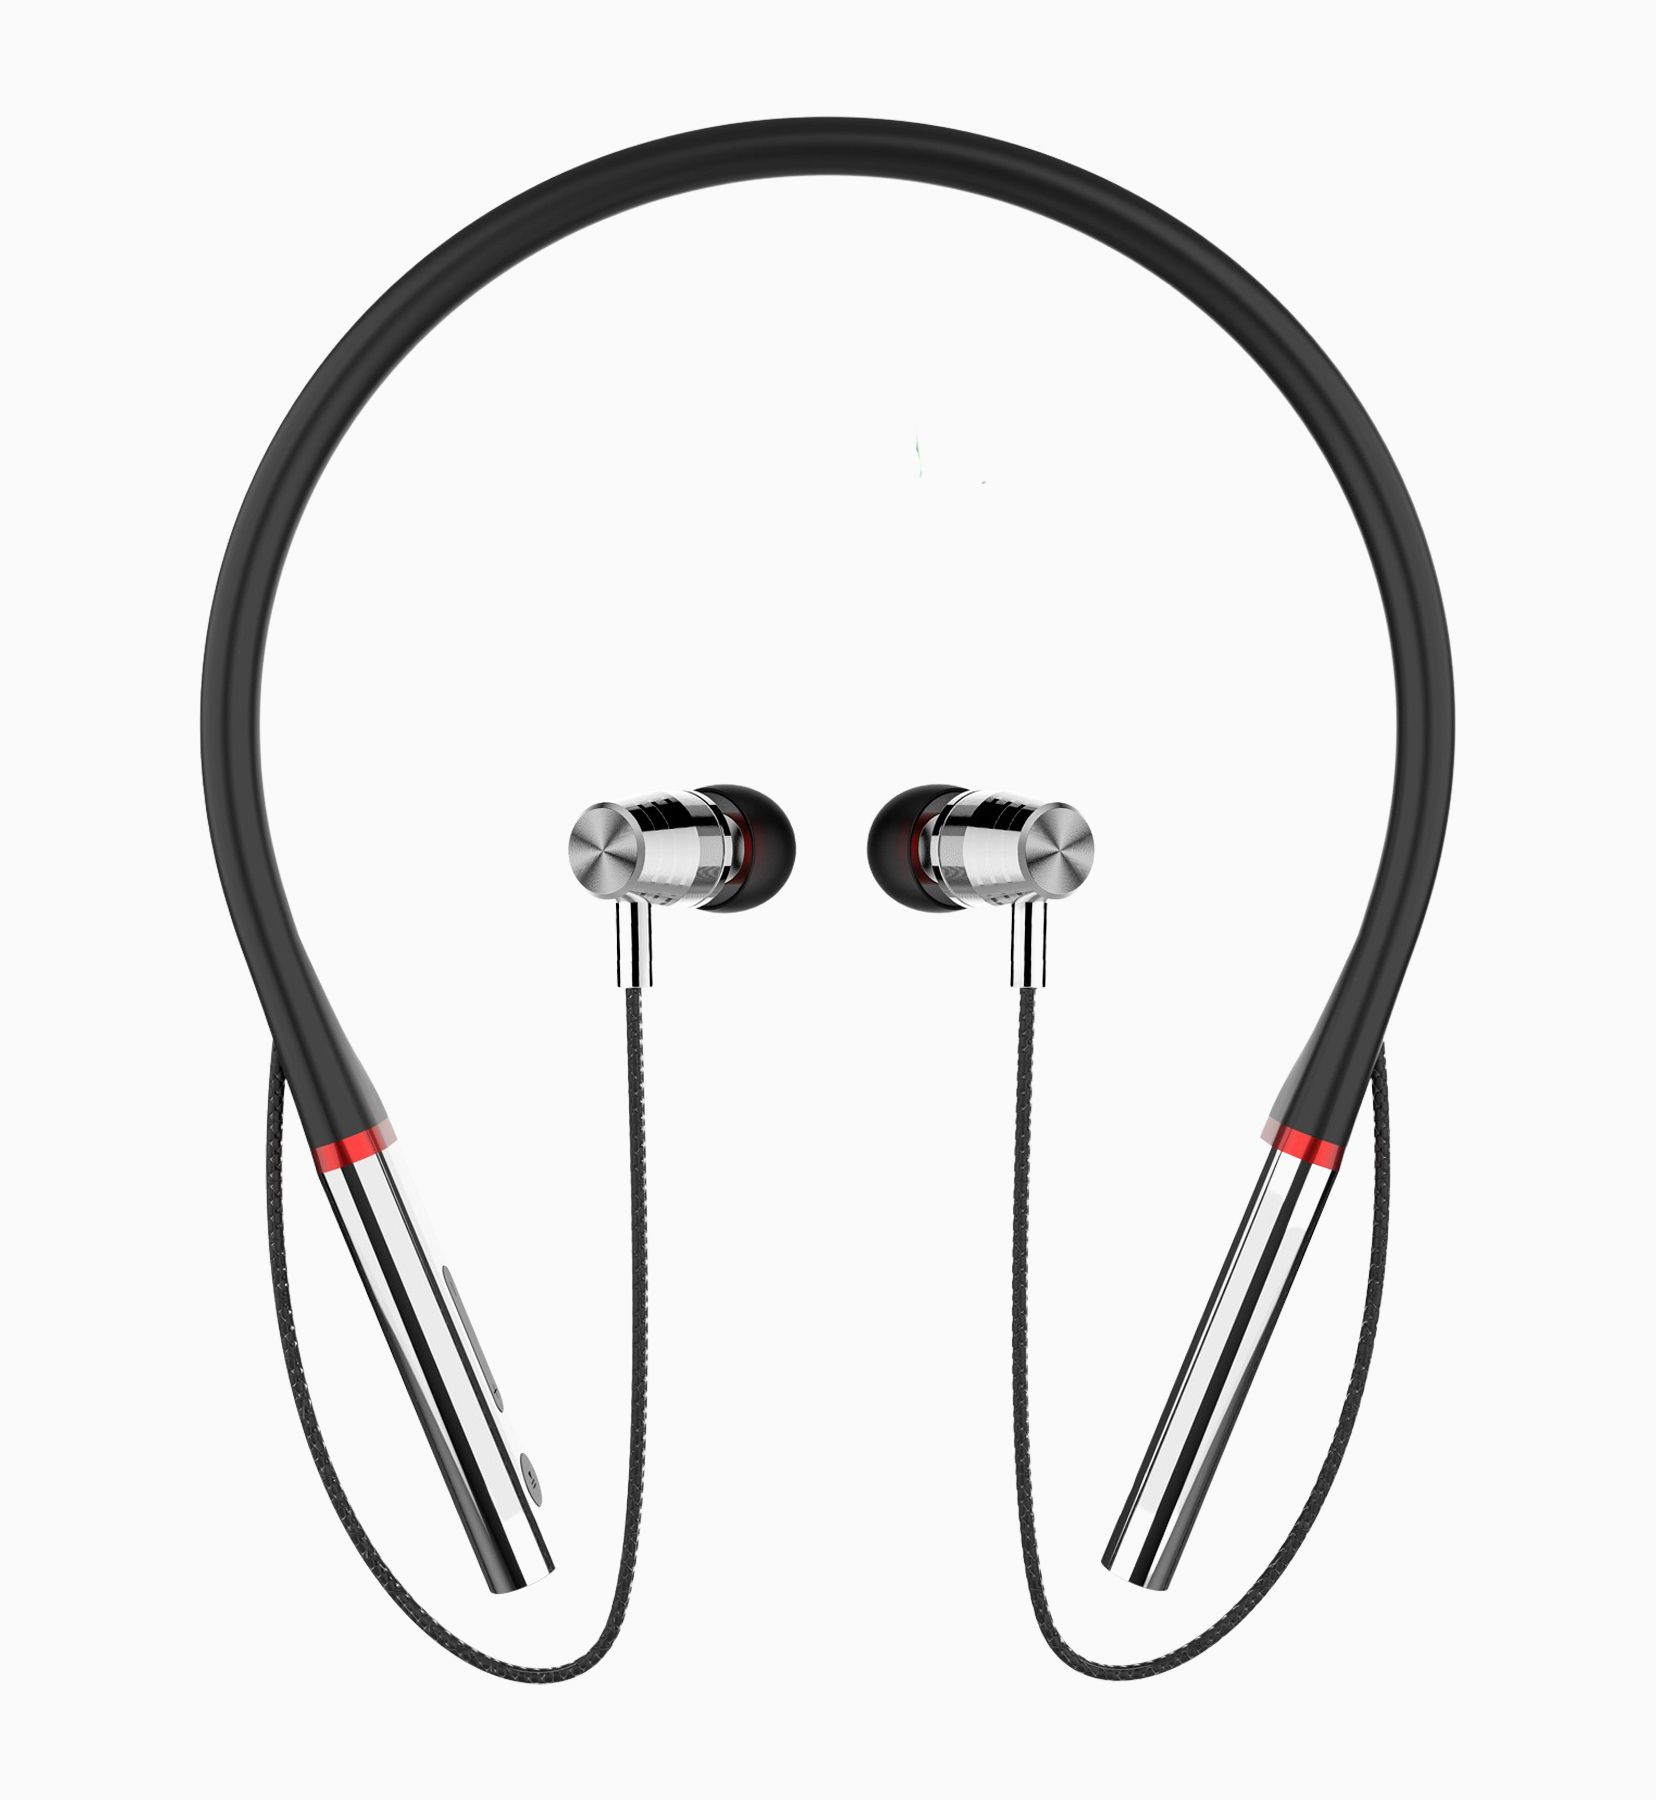 ideal für Homeoffice AptX HD Audio/Bass Boost cVc8.0 Noise Cancelling Mikrofon Sport Kopfhörer 15 Std Spielzeit Bluetooth 5.0 IPX4 Wasserfest PLUG N PULL Wireless In Ear Bluetooth Headset 